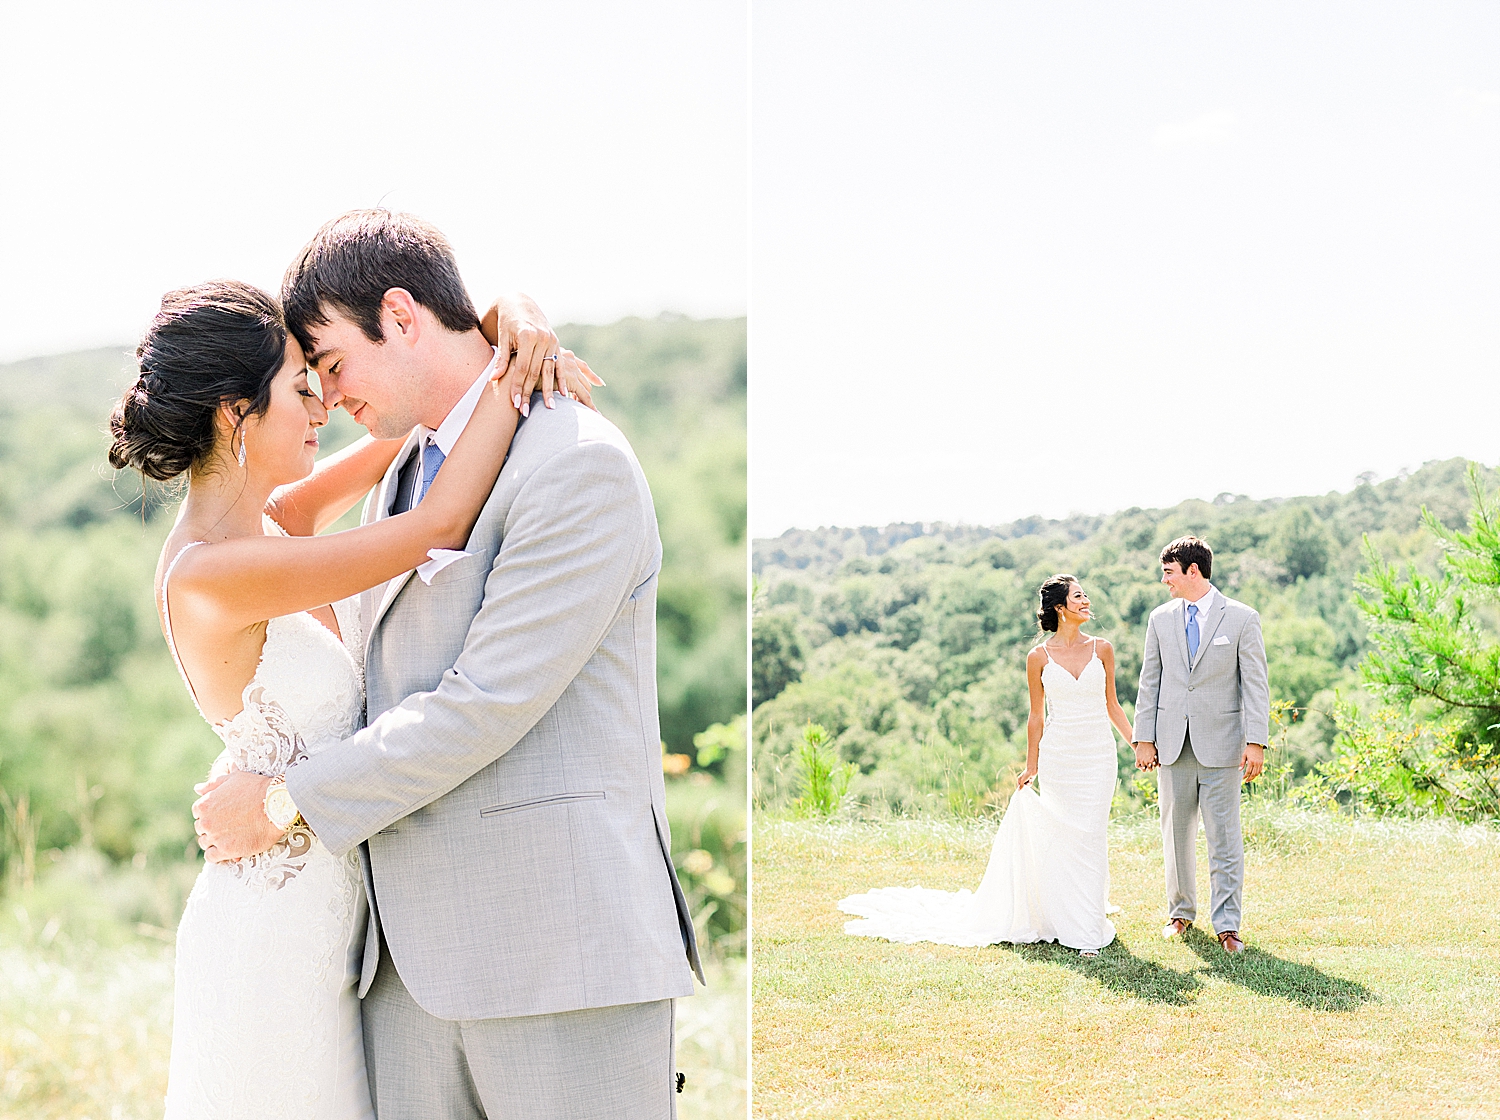 Alabama couple hugs on hill during wedding photos